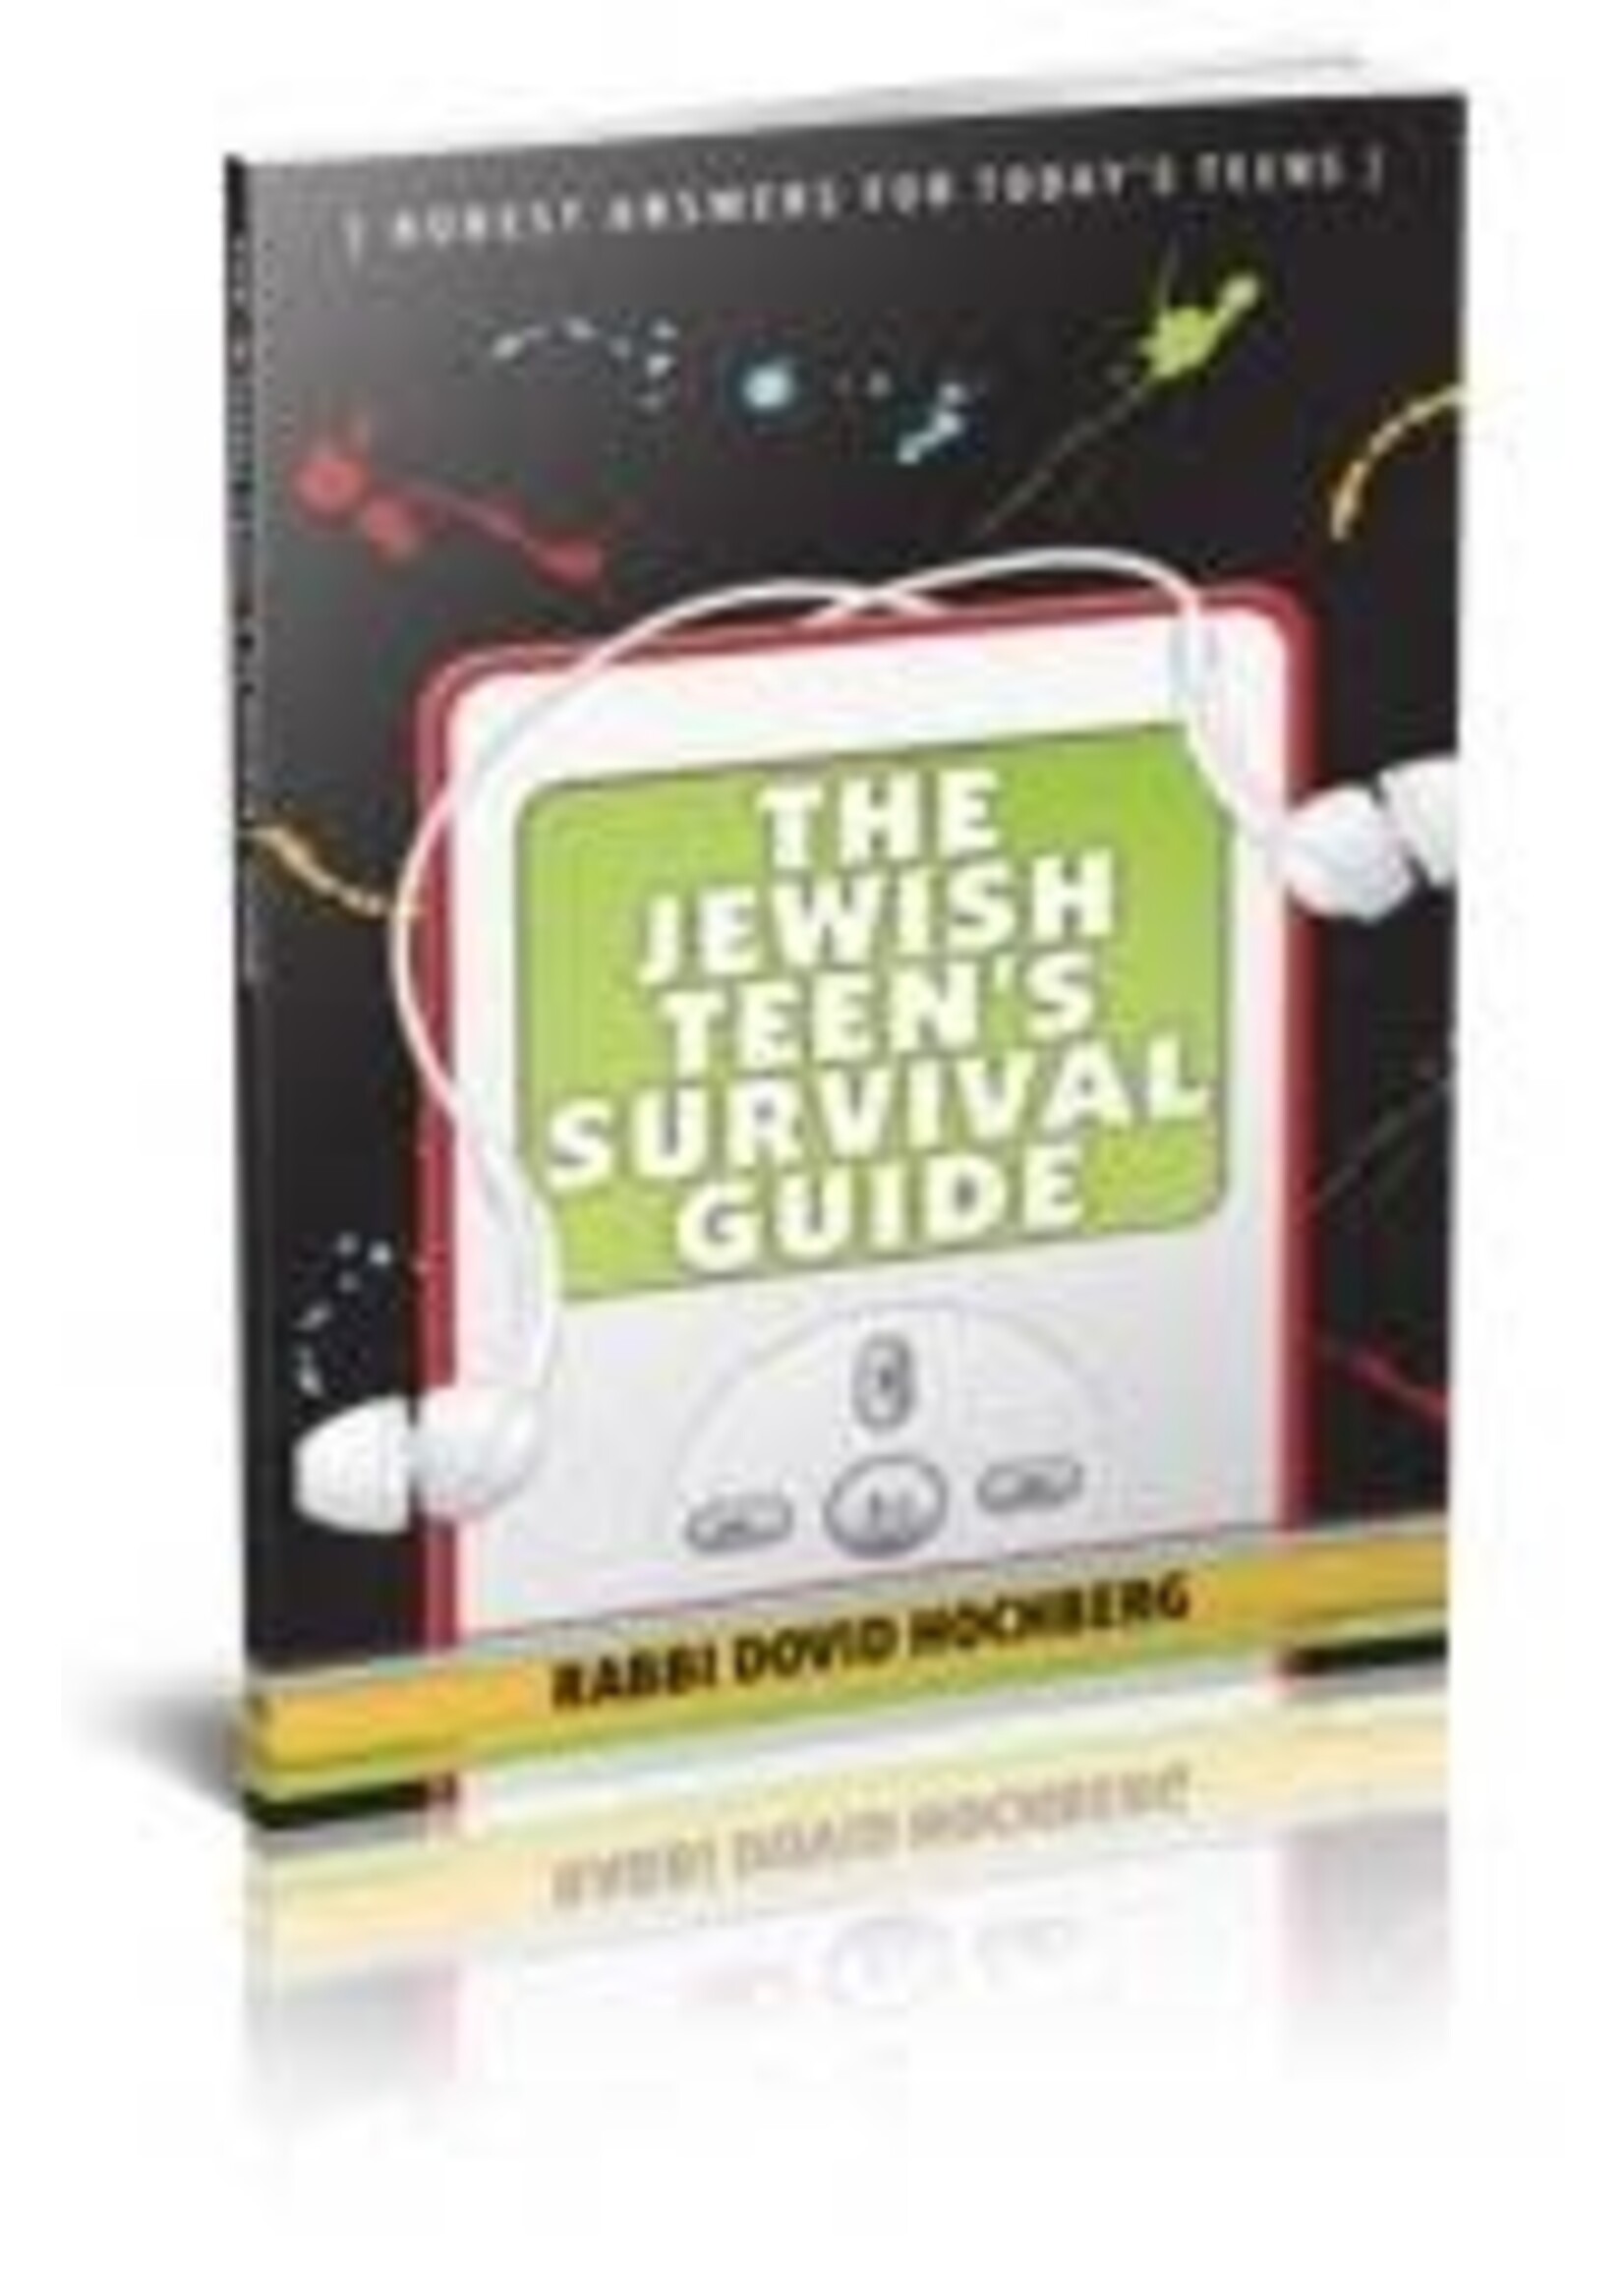 THE JEWISH TEEN'S SURVIVAL